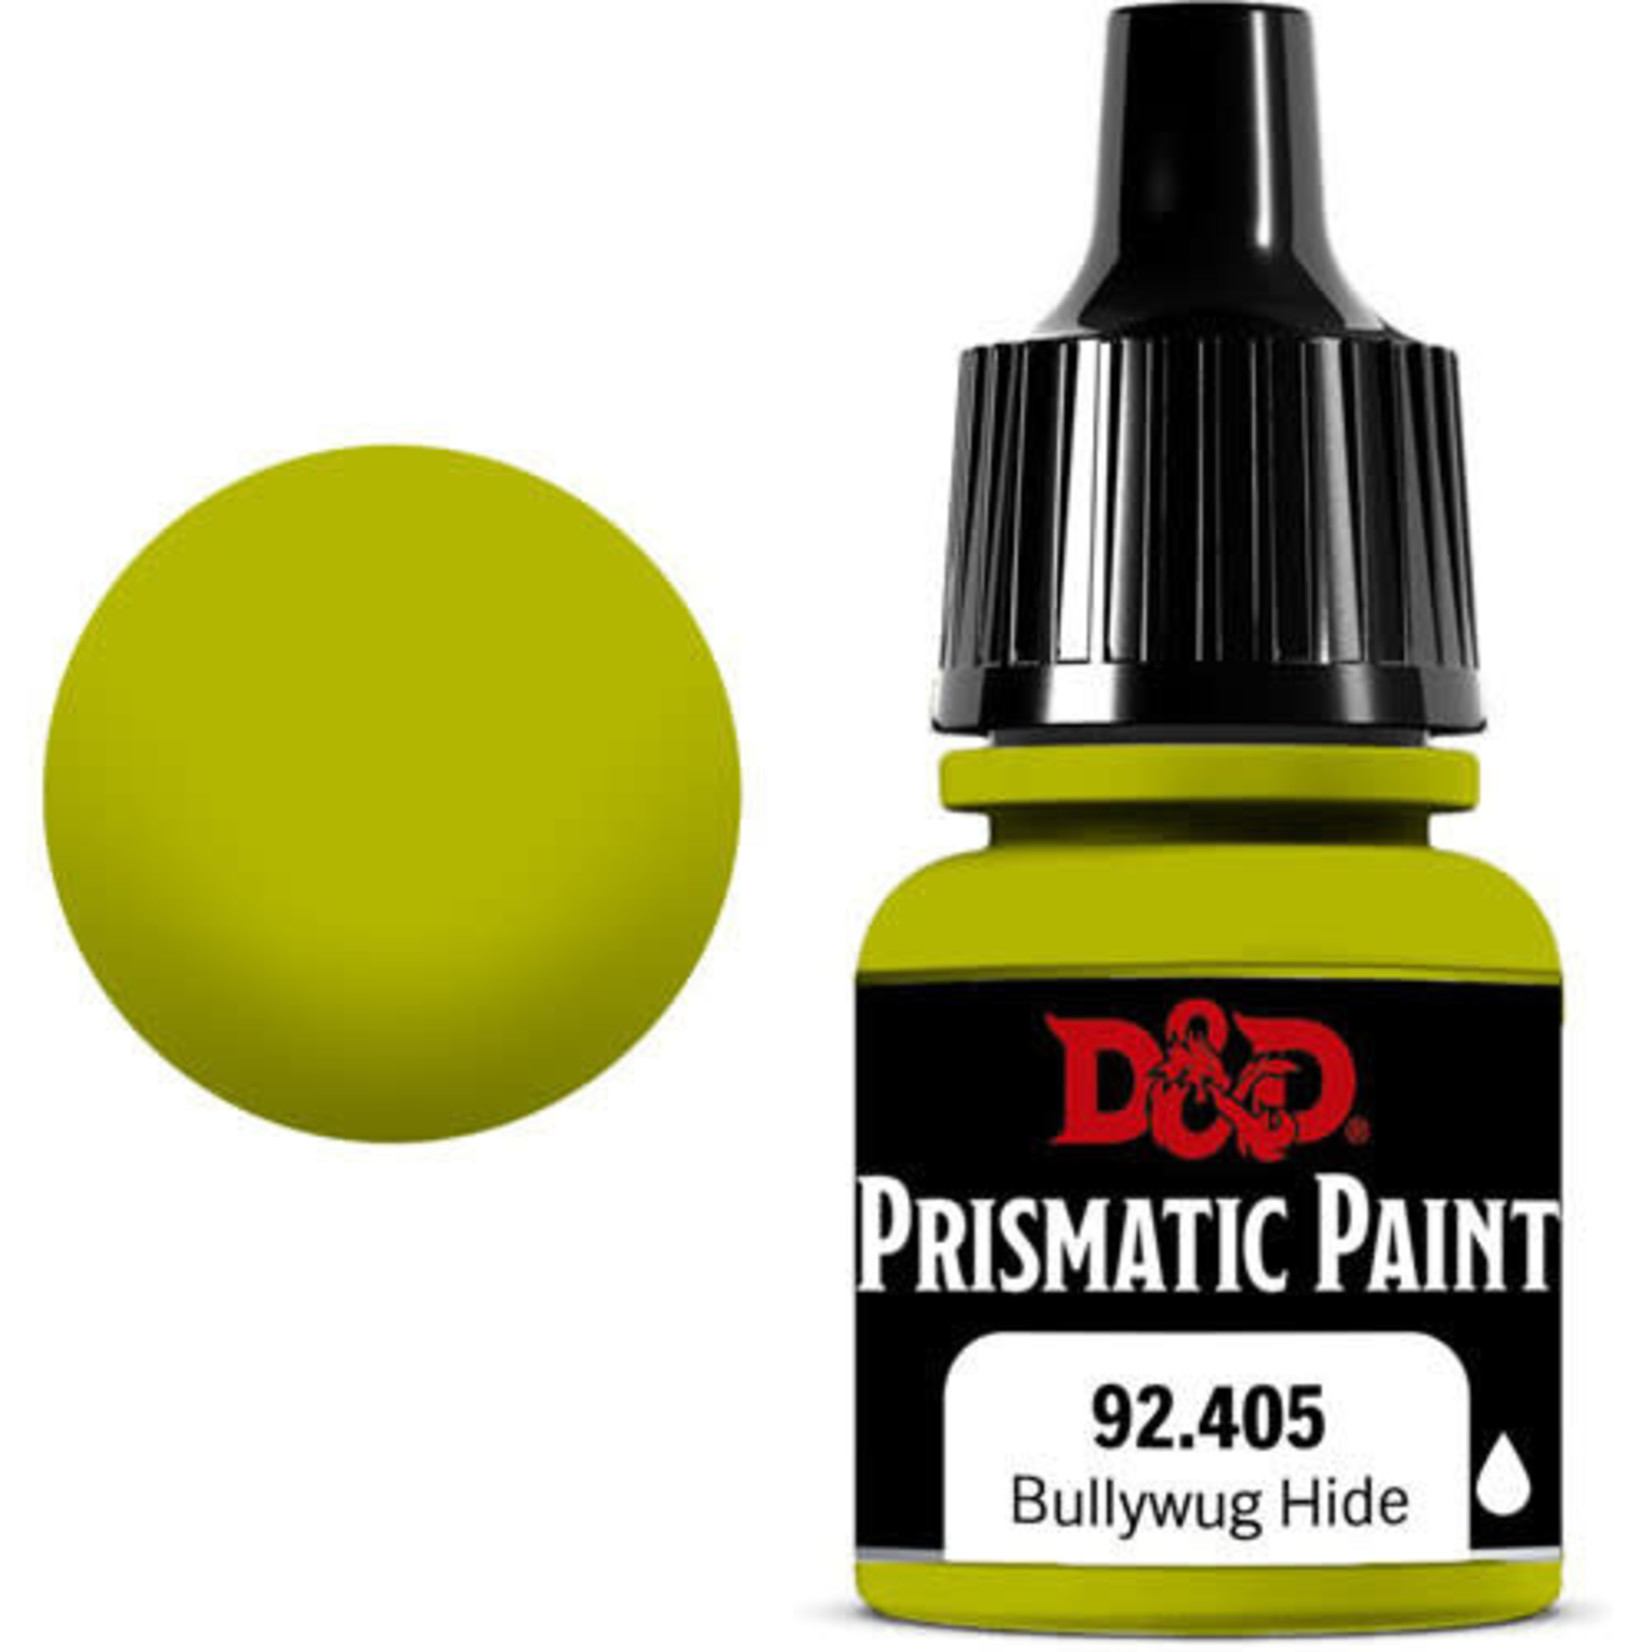 WIZKIDS/NECA D&D Prismatic Paint: Bullywug Hide 92.405